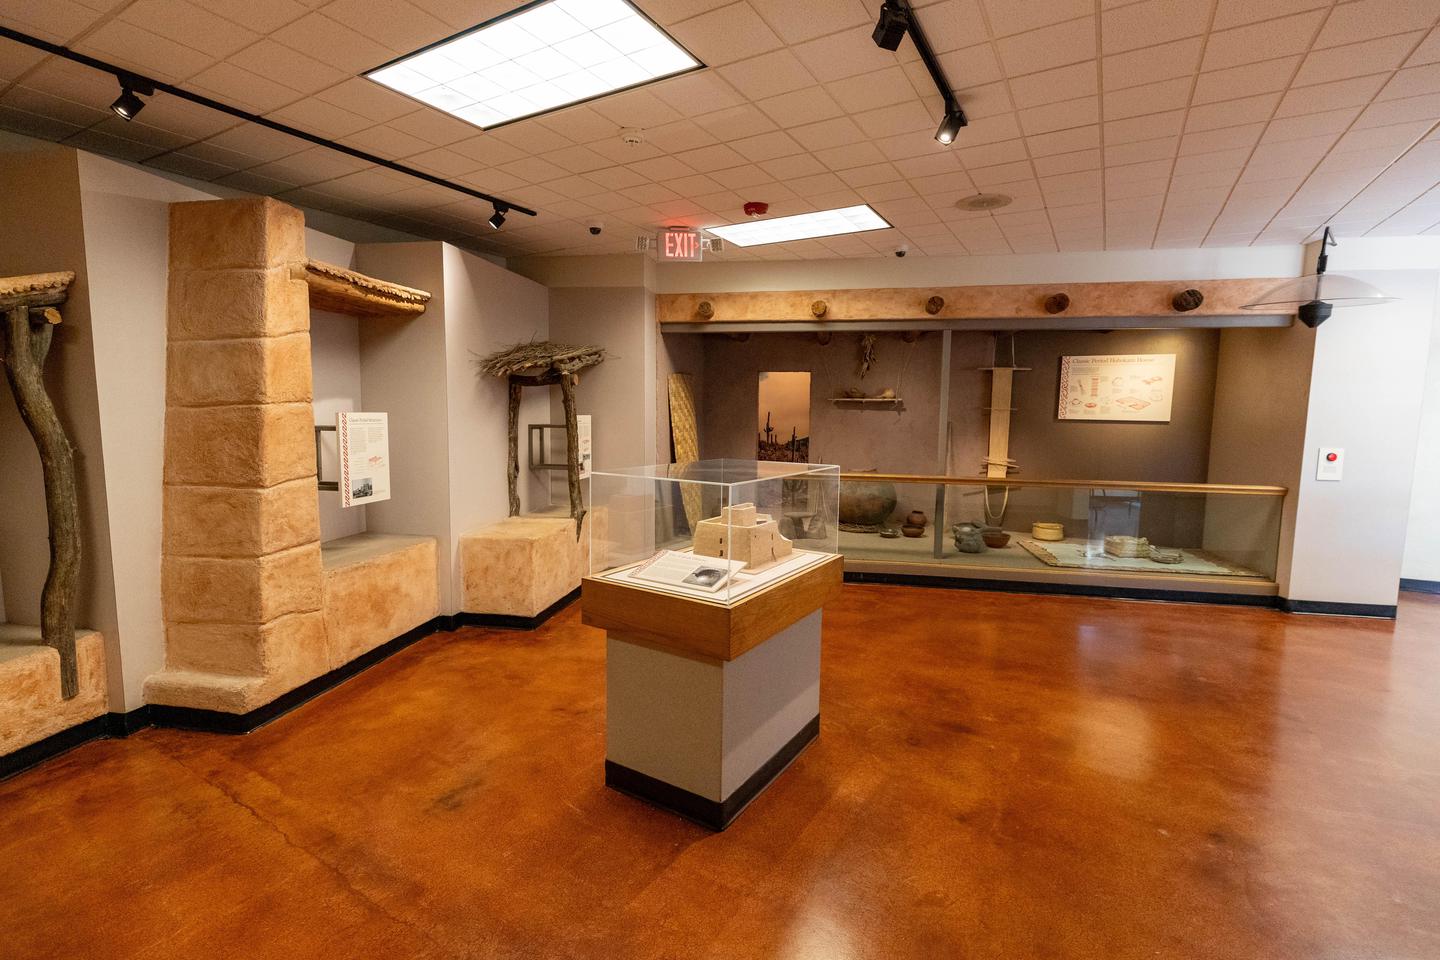 Exhibit at Casa Grande Visitor CenterThe visitor center has exhibits about the history of Casa Grande.